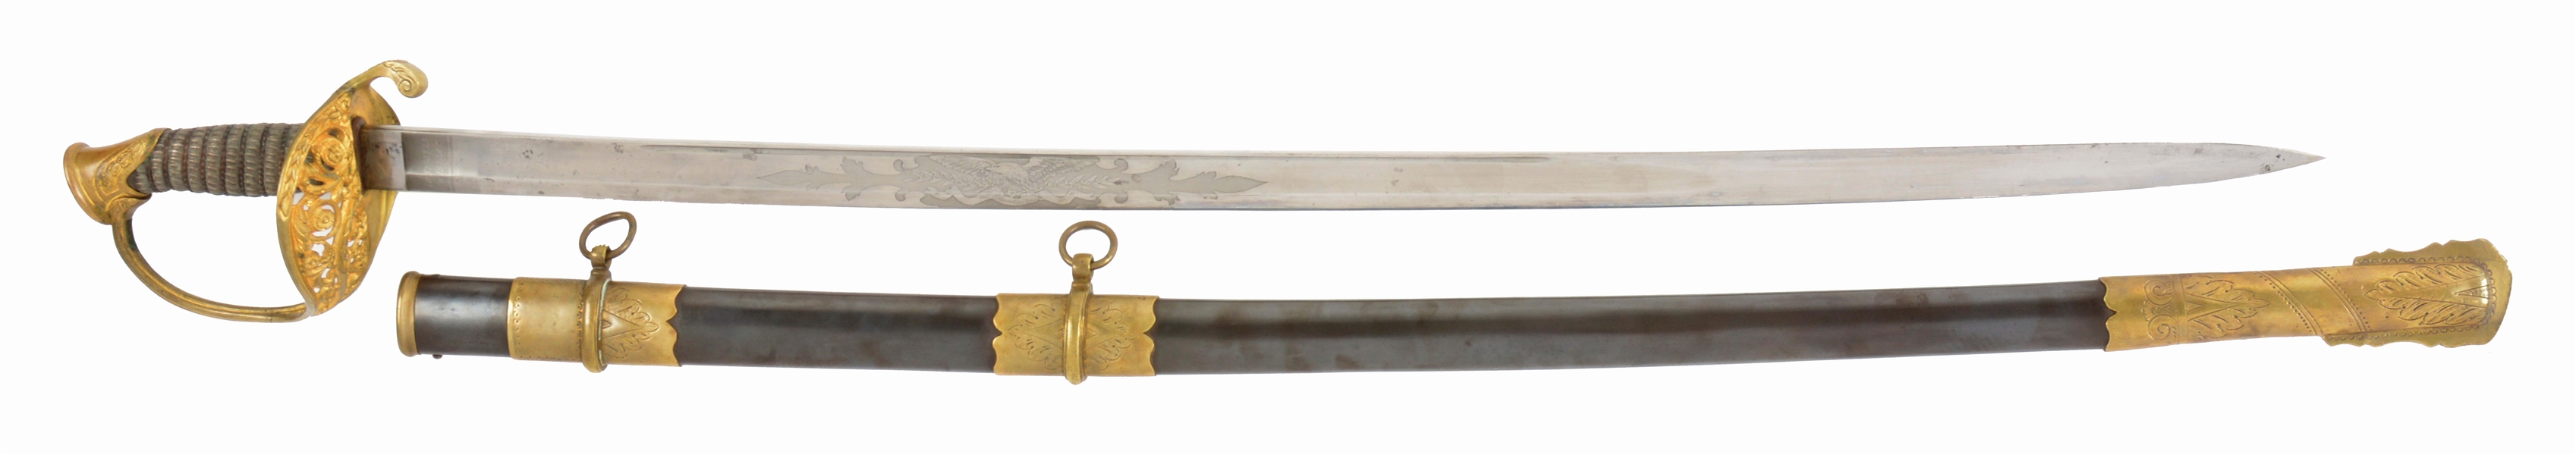 1850 FOOT OFFICER SWORD BY FOLSOM OF ST. LOUIS.